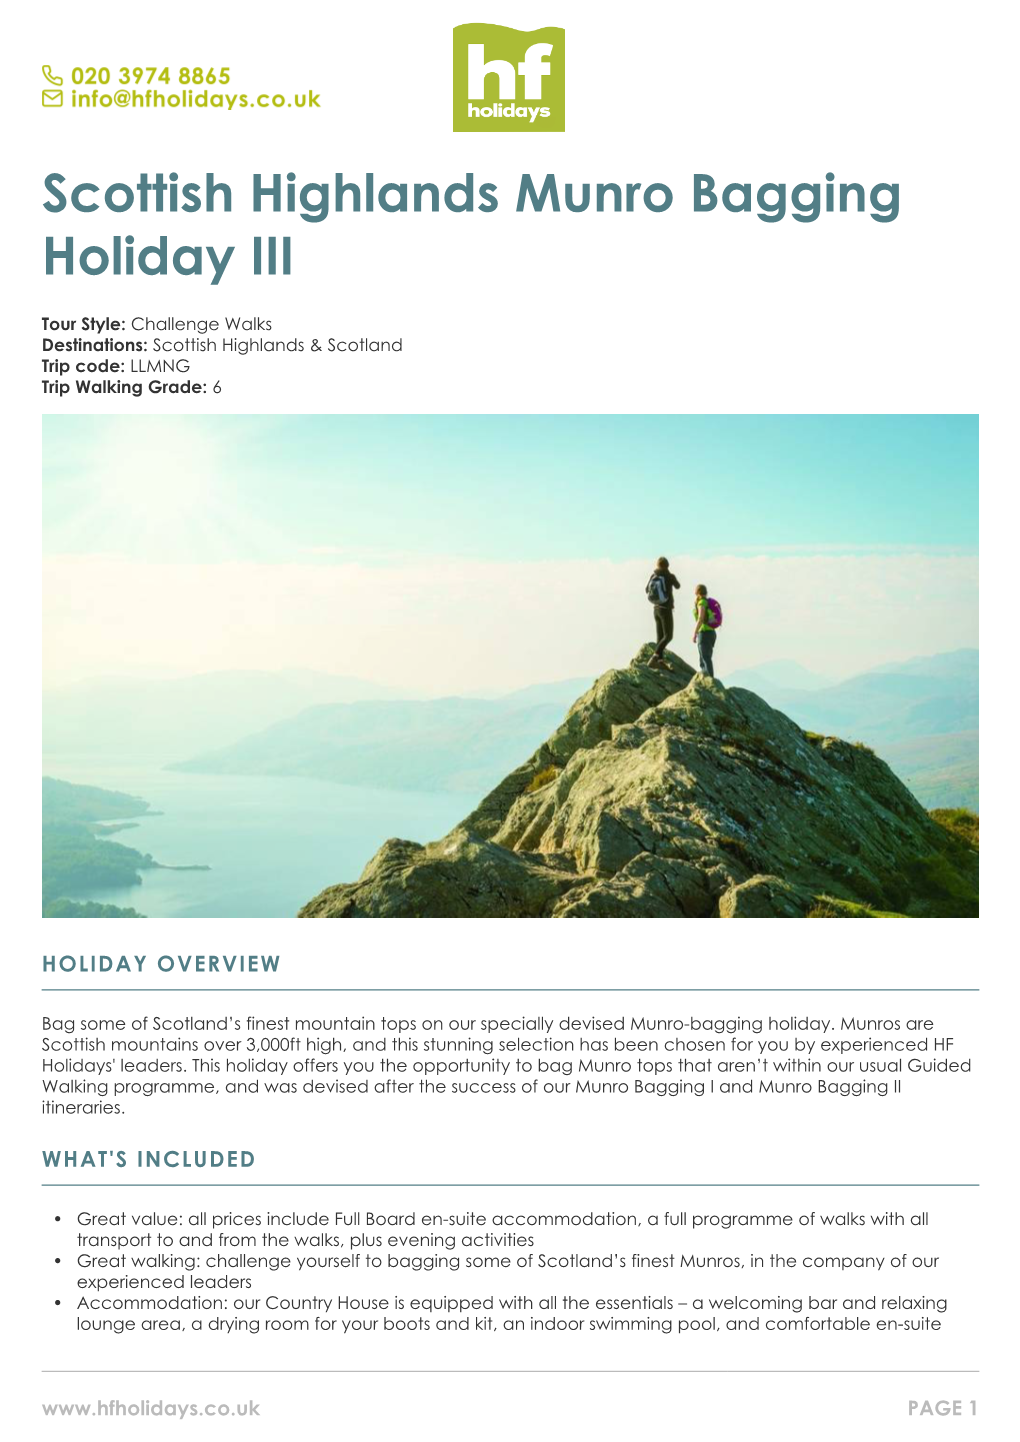 Scottish Highlands Munro Bagging Holiday III